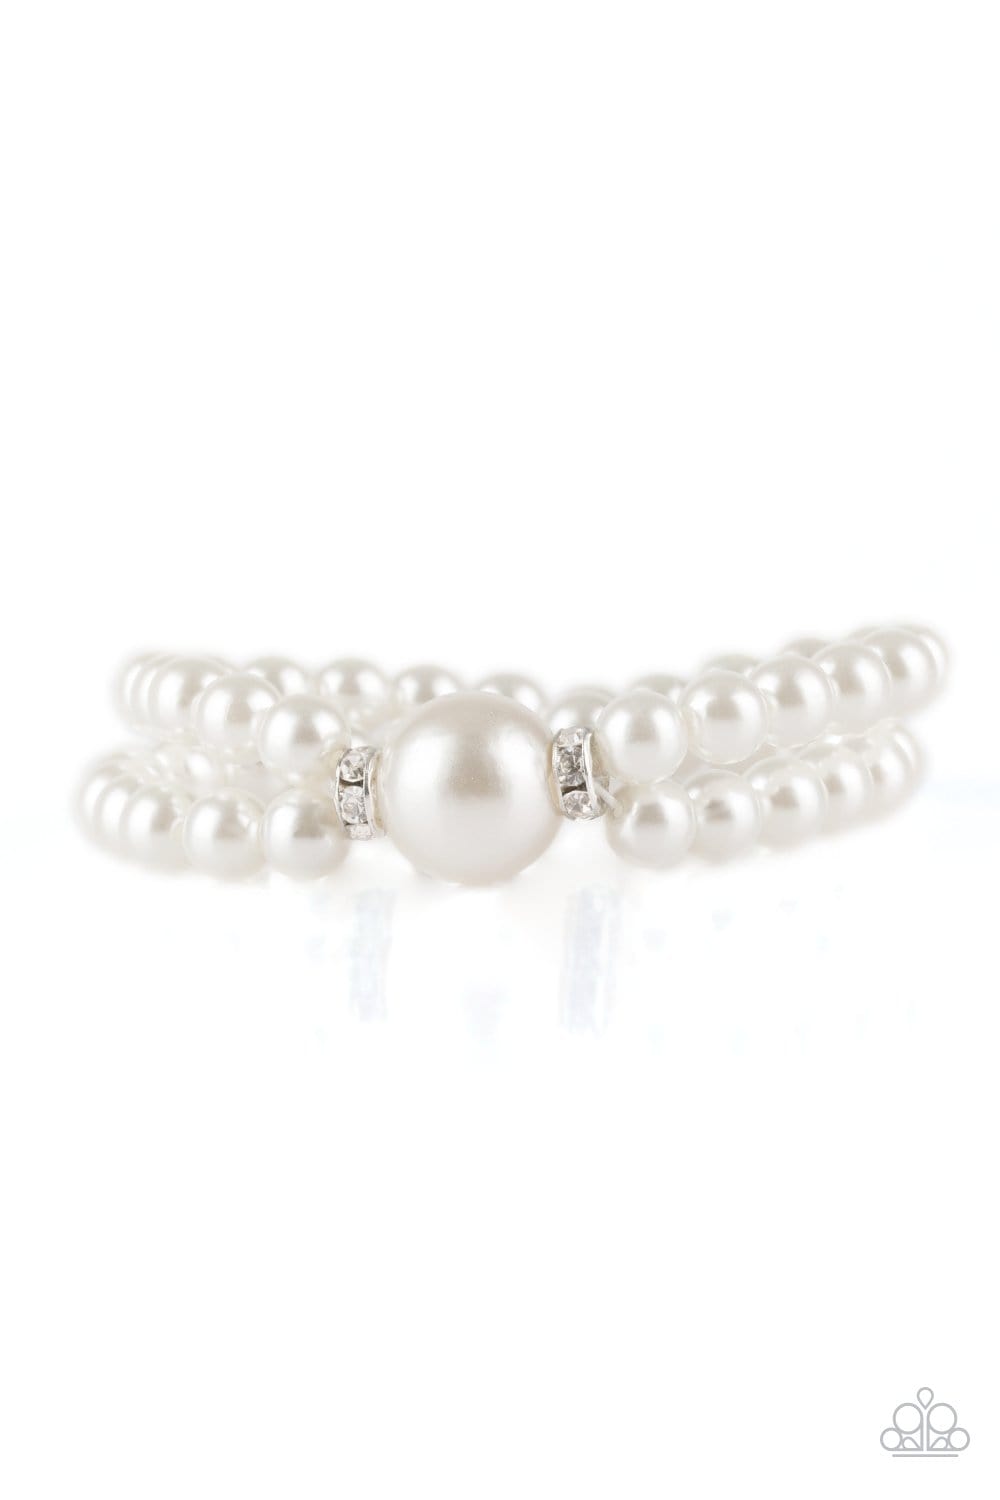 Romantic Redux-White Pearl & Rhinestone Stretch Bracelet